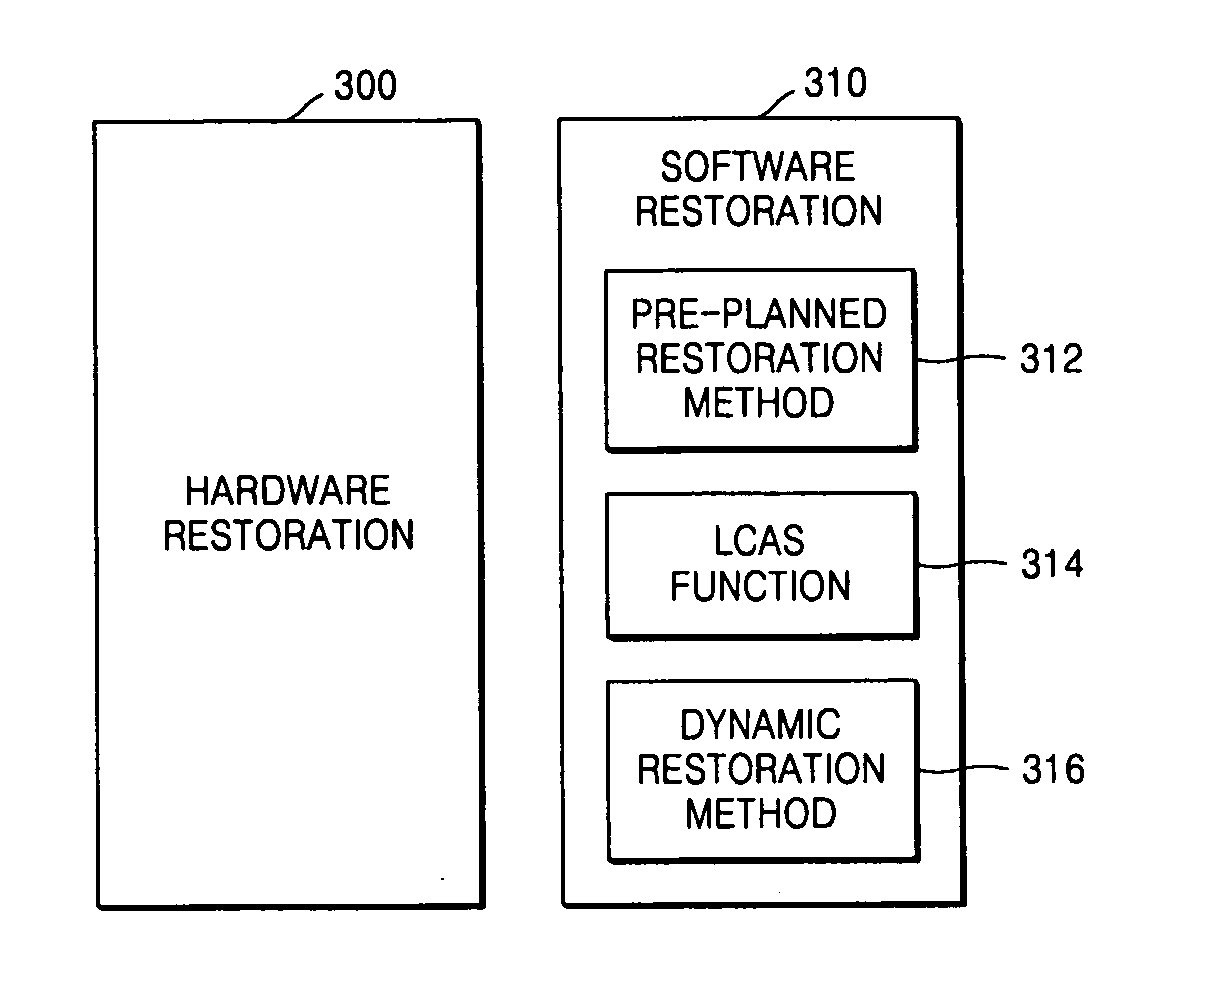 Multi-layer restoration method using LCAS